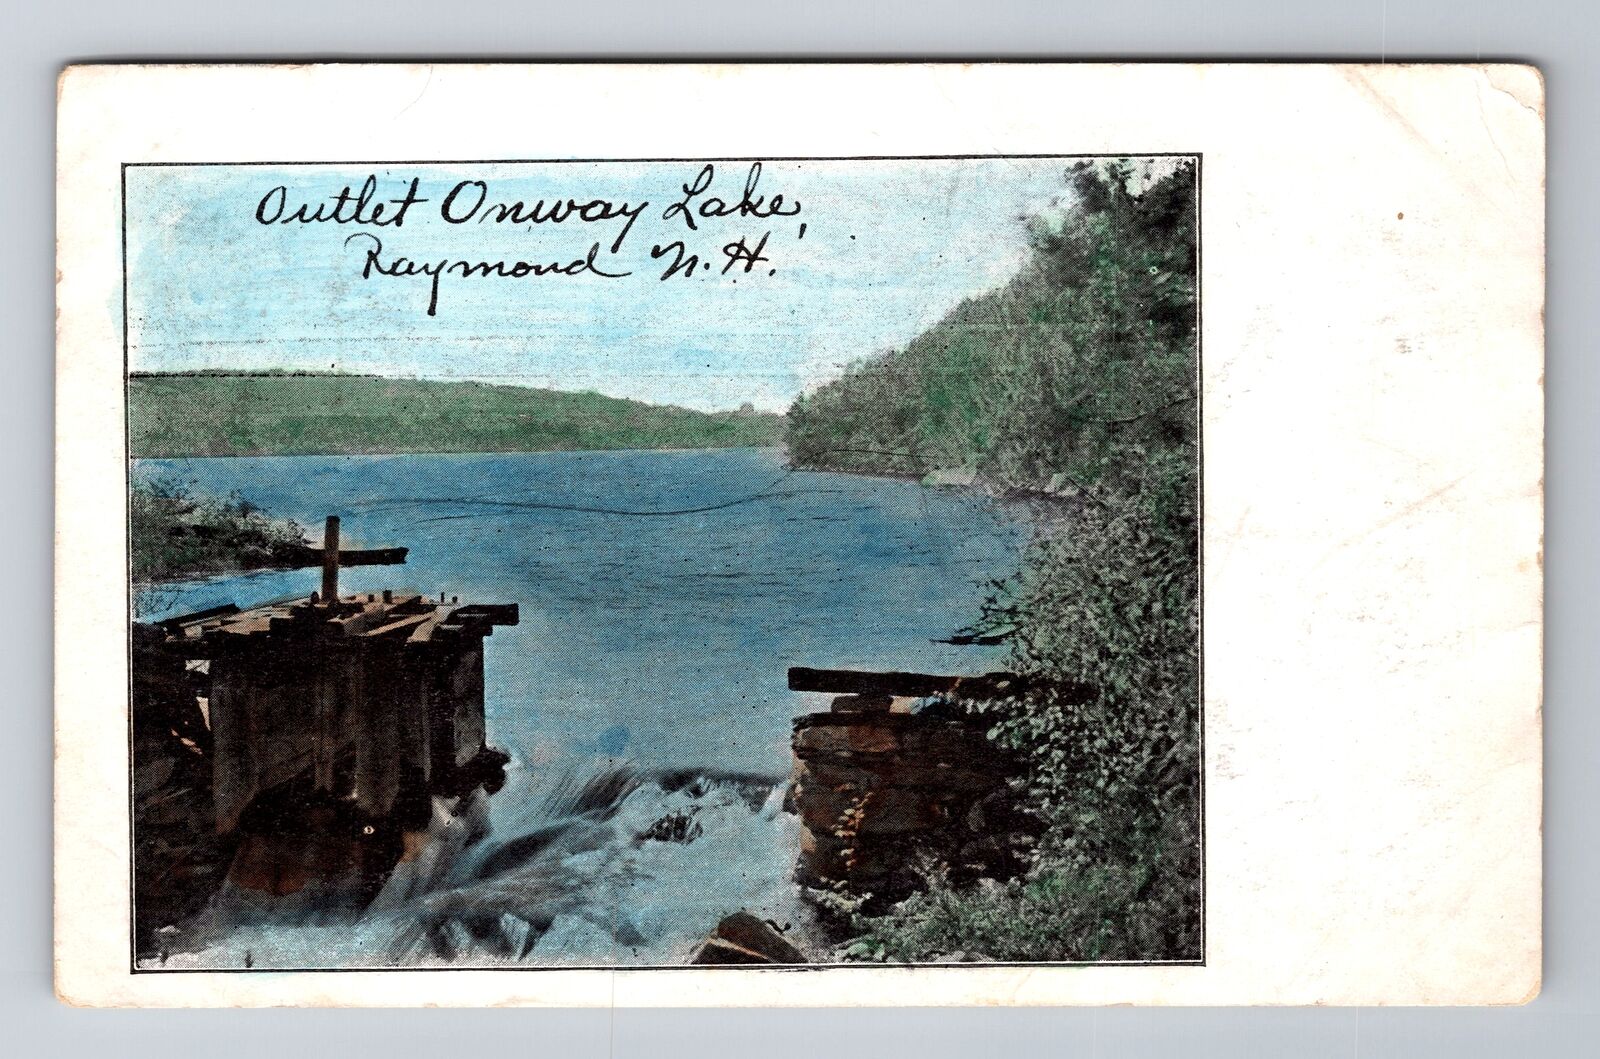 Raymond NH-New Hampshire, Outlet Onway Lake, Antique Vintage Souvenir Postcard